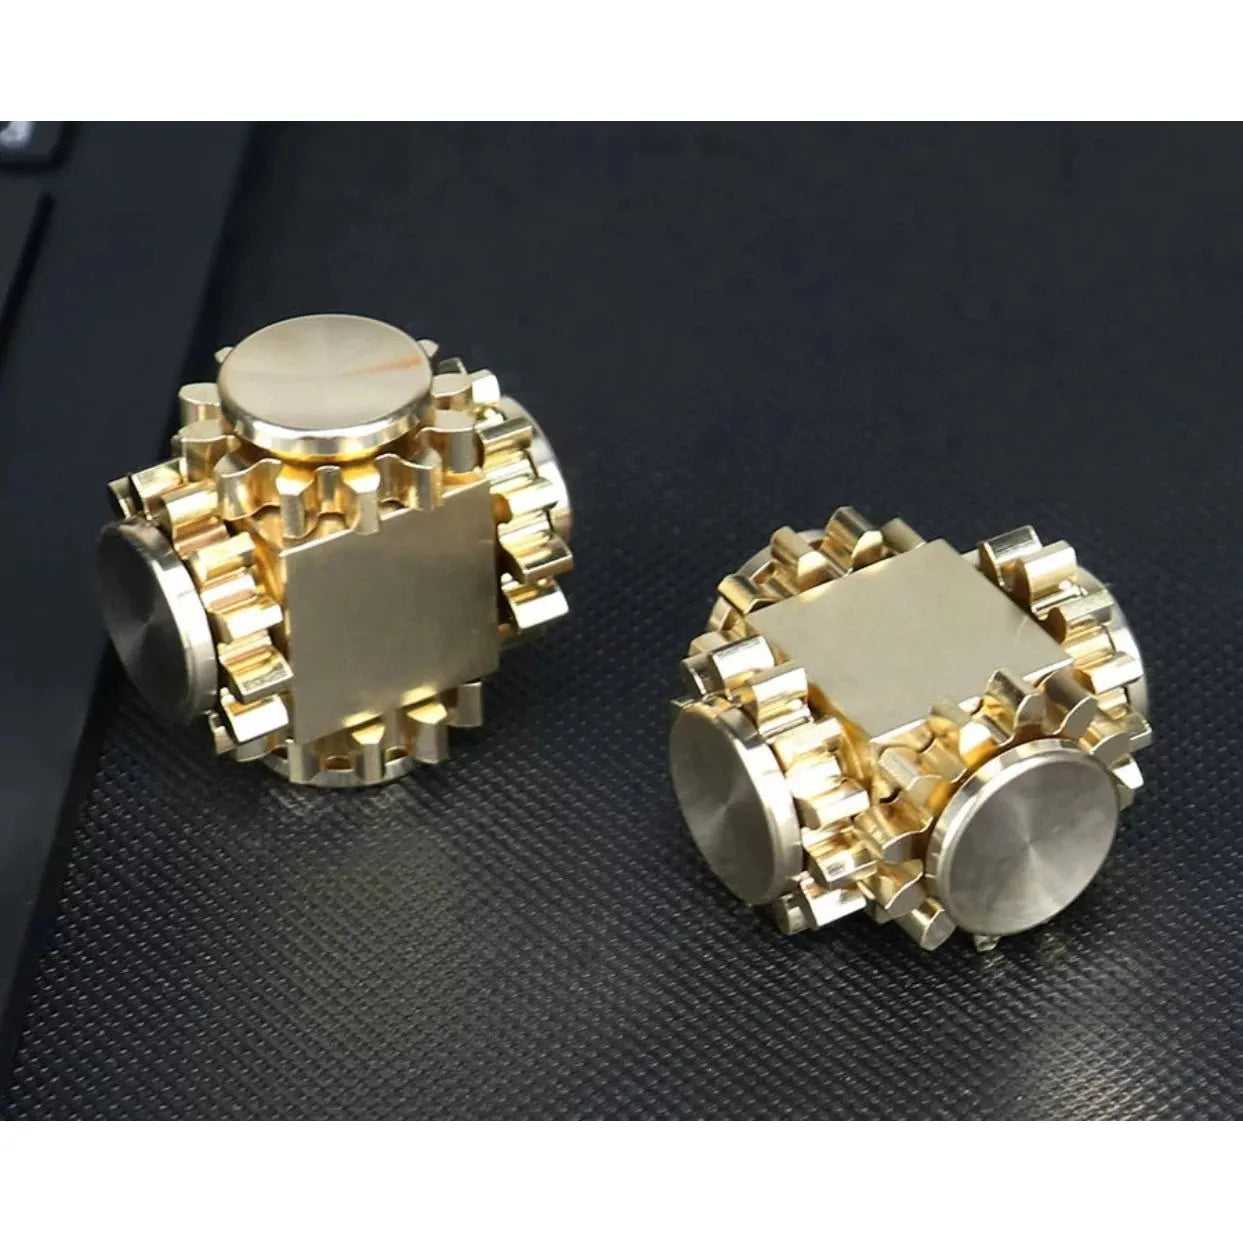 Pure Brass Cube Gear Fidget Spinner Linkage Metal Fidget - Sensory Circle